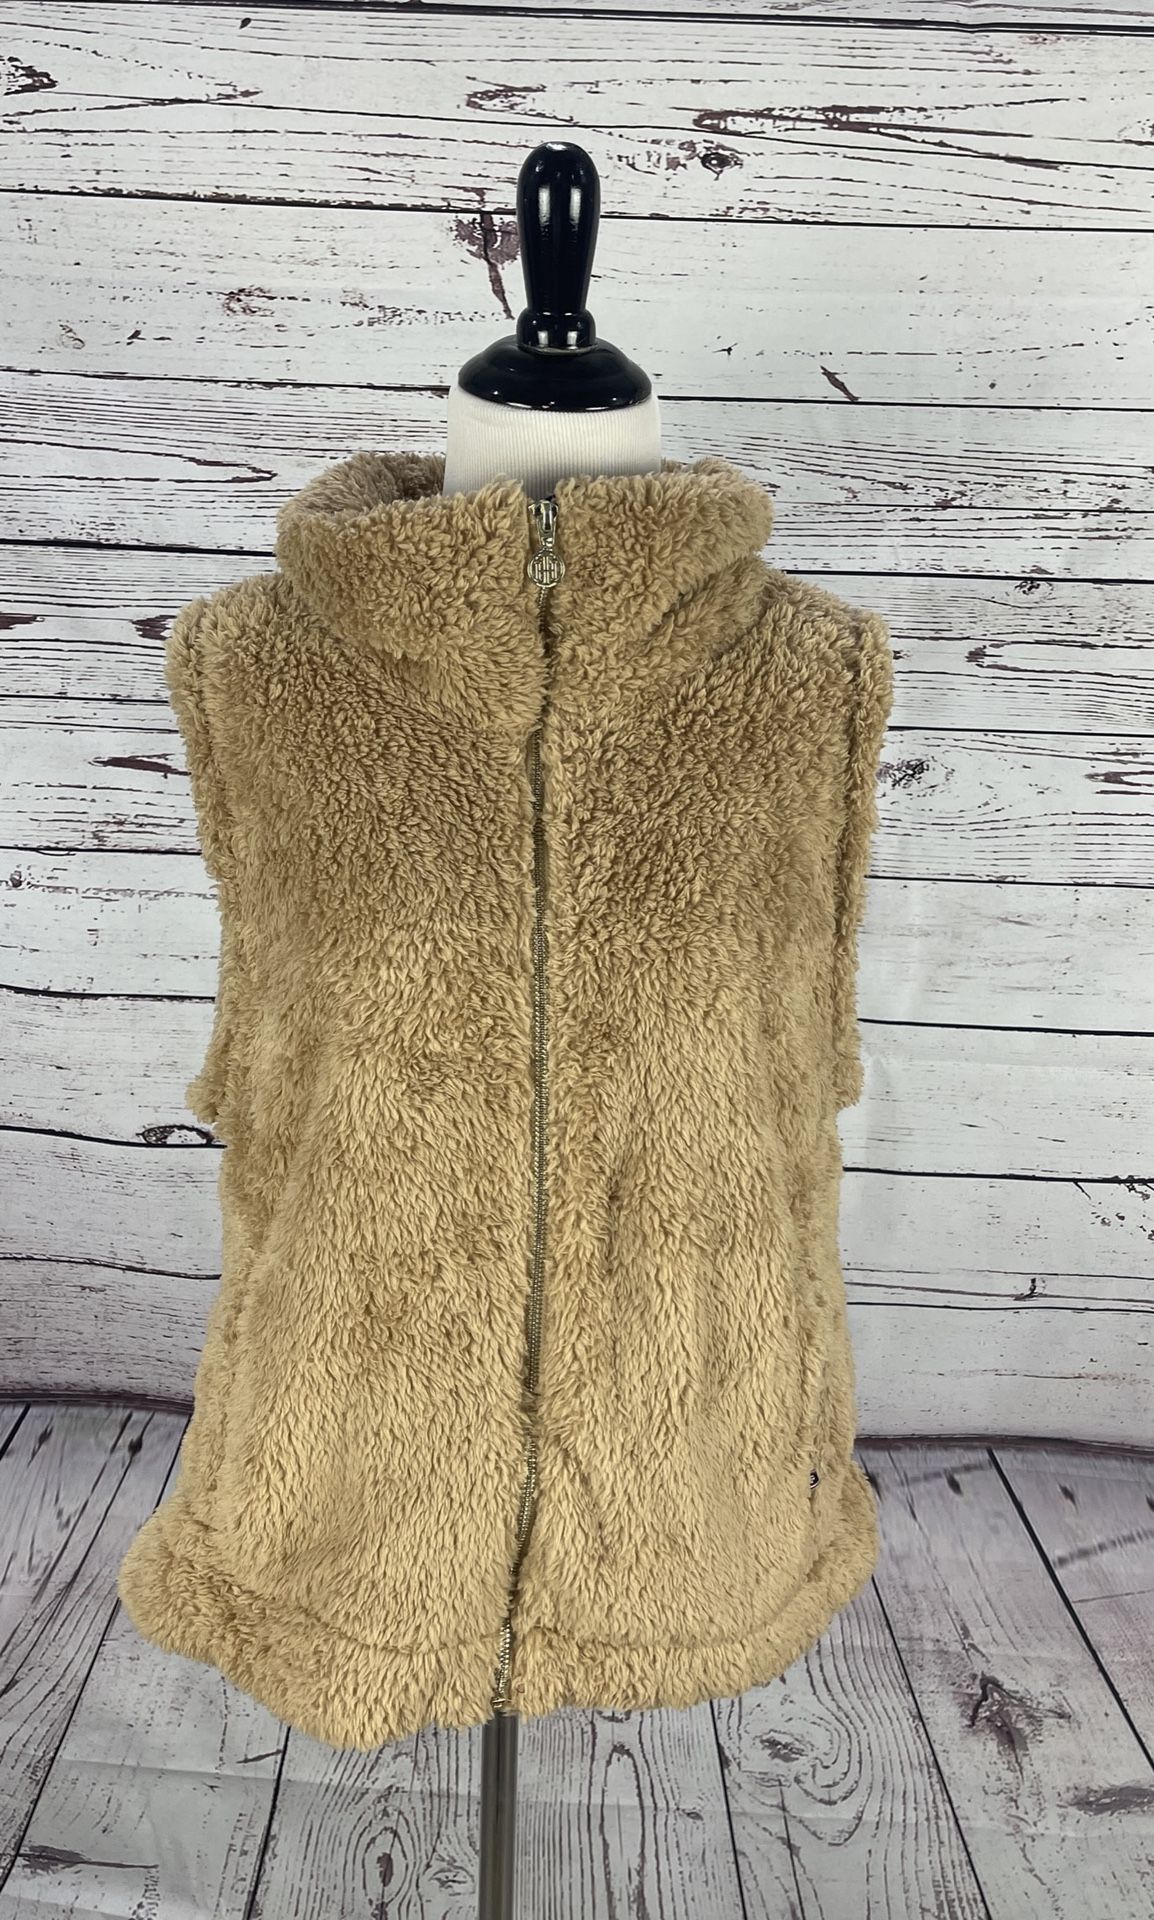 New Tommy Hilfiger Fur Full Zip Vest Size Large Polyester Winter